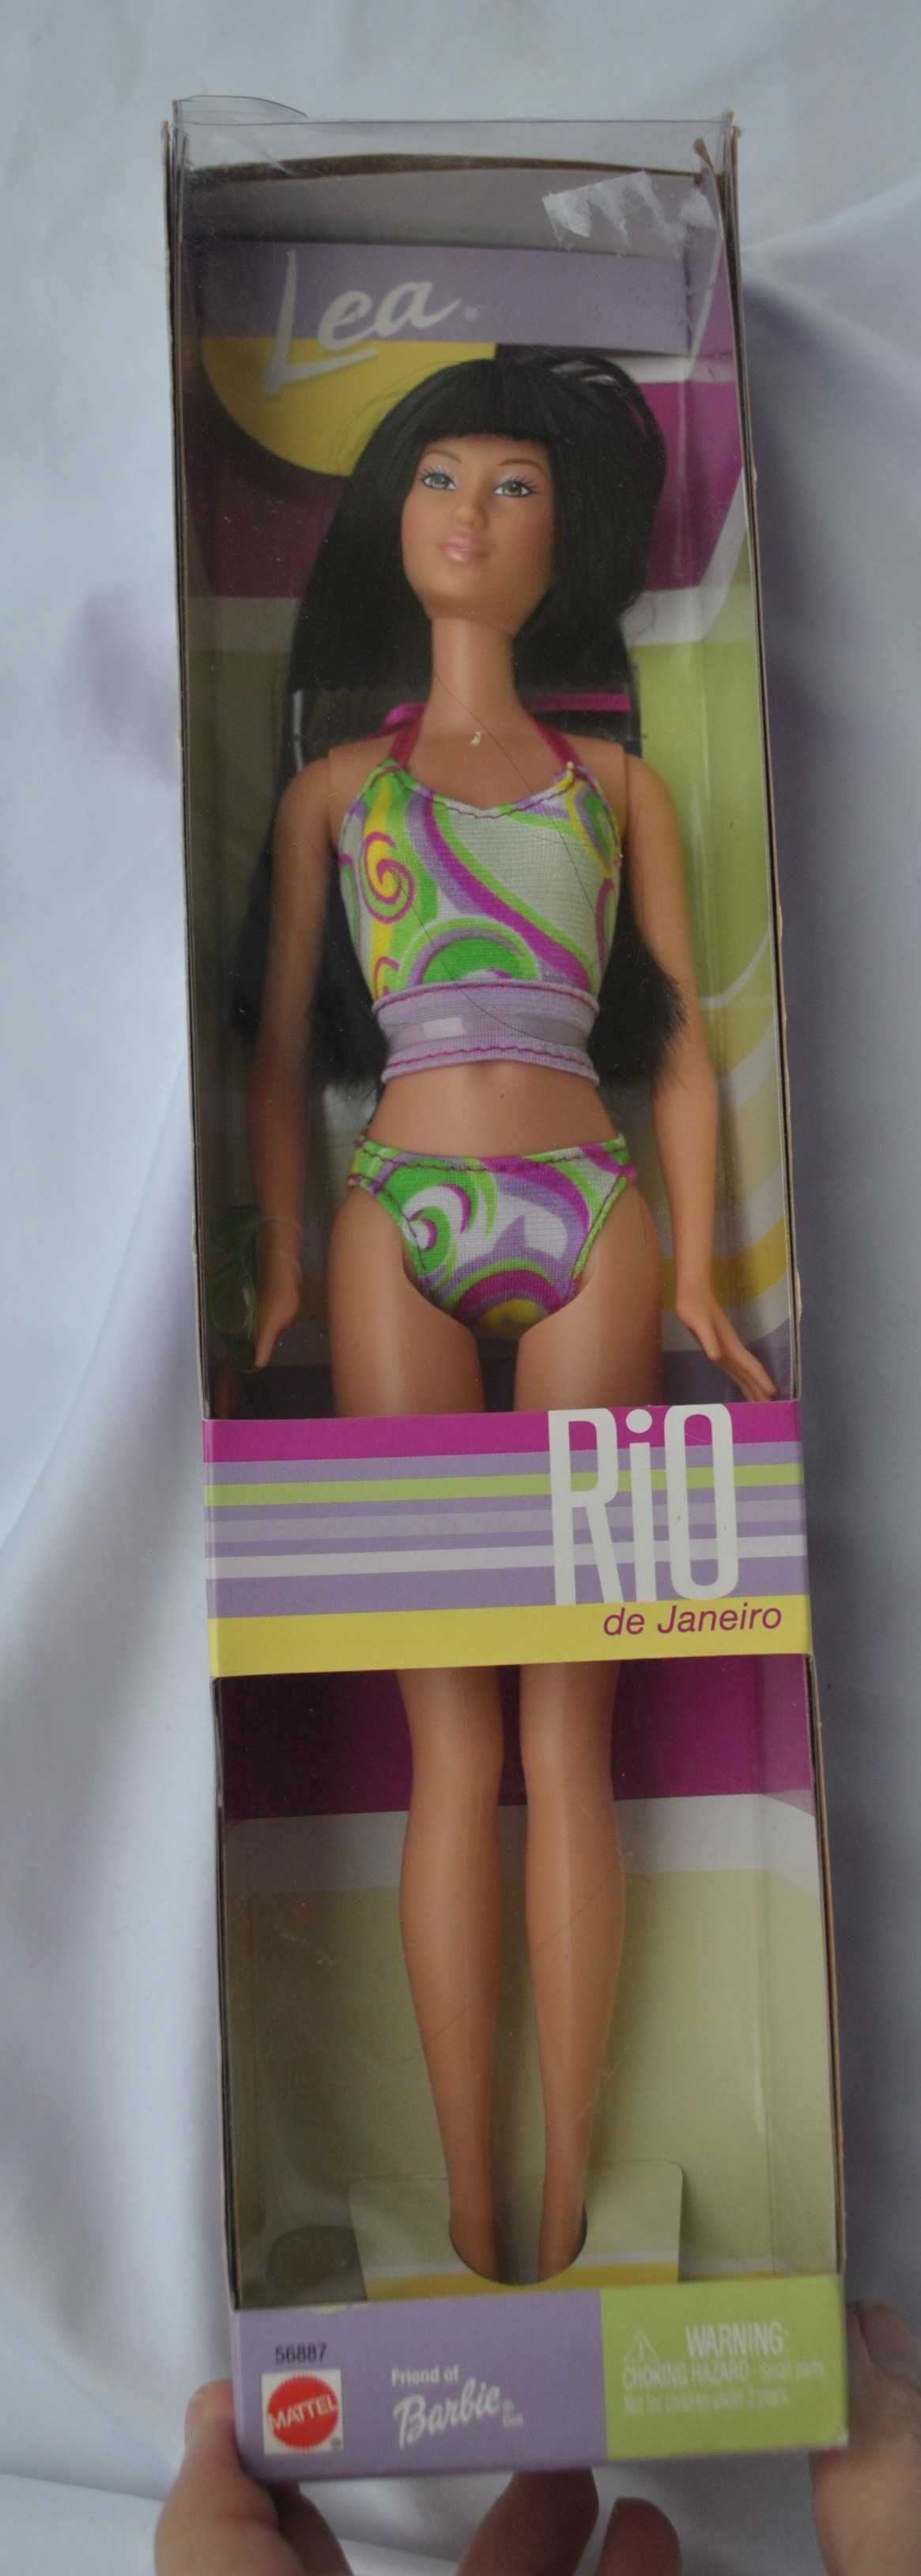 lalka barbie - Rio de Janerio Lea - mattel 2002